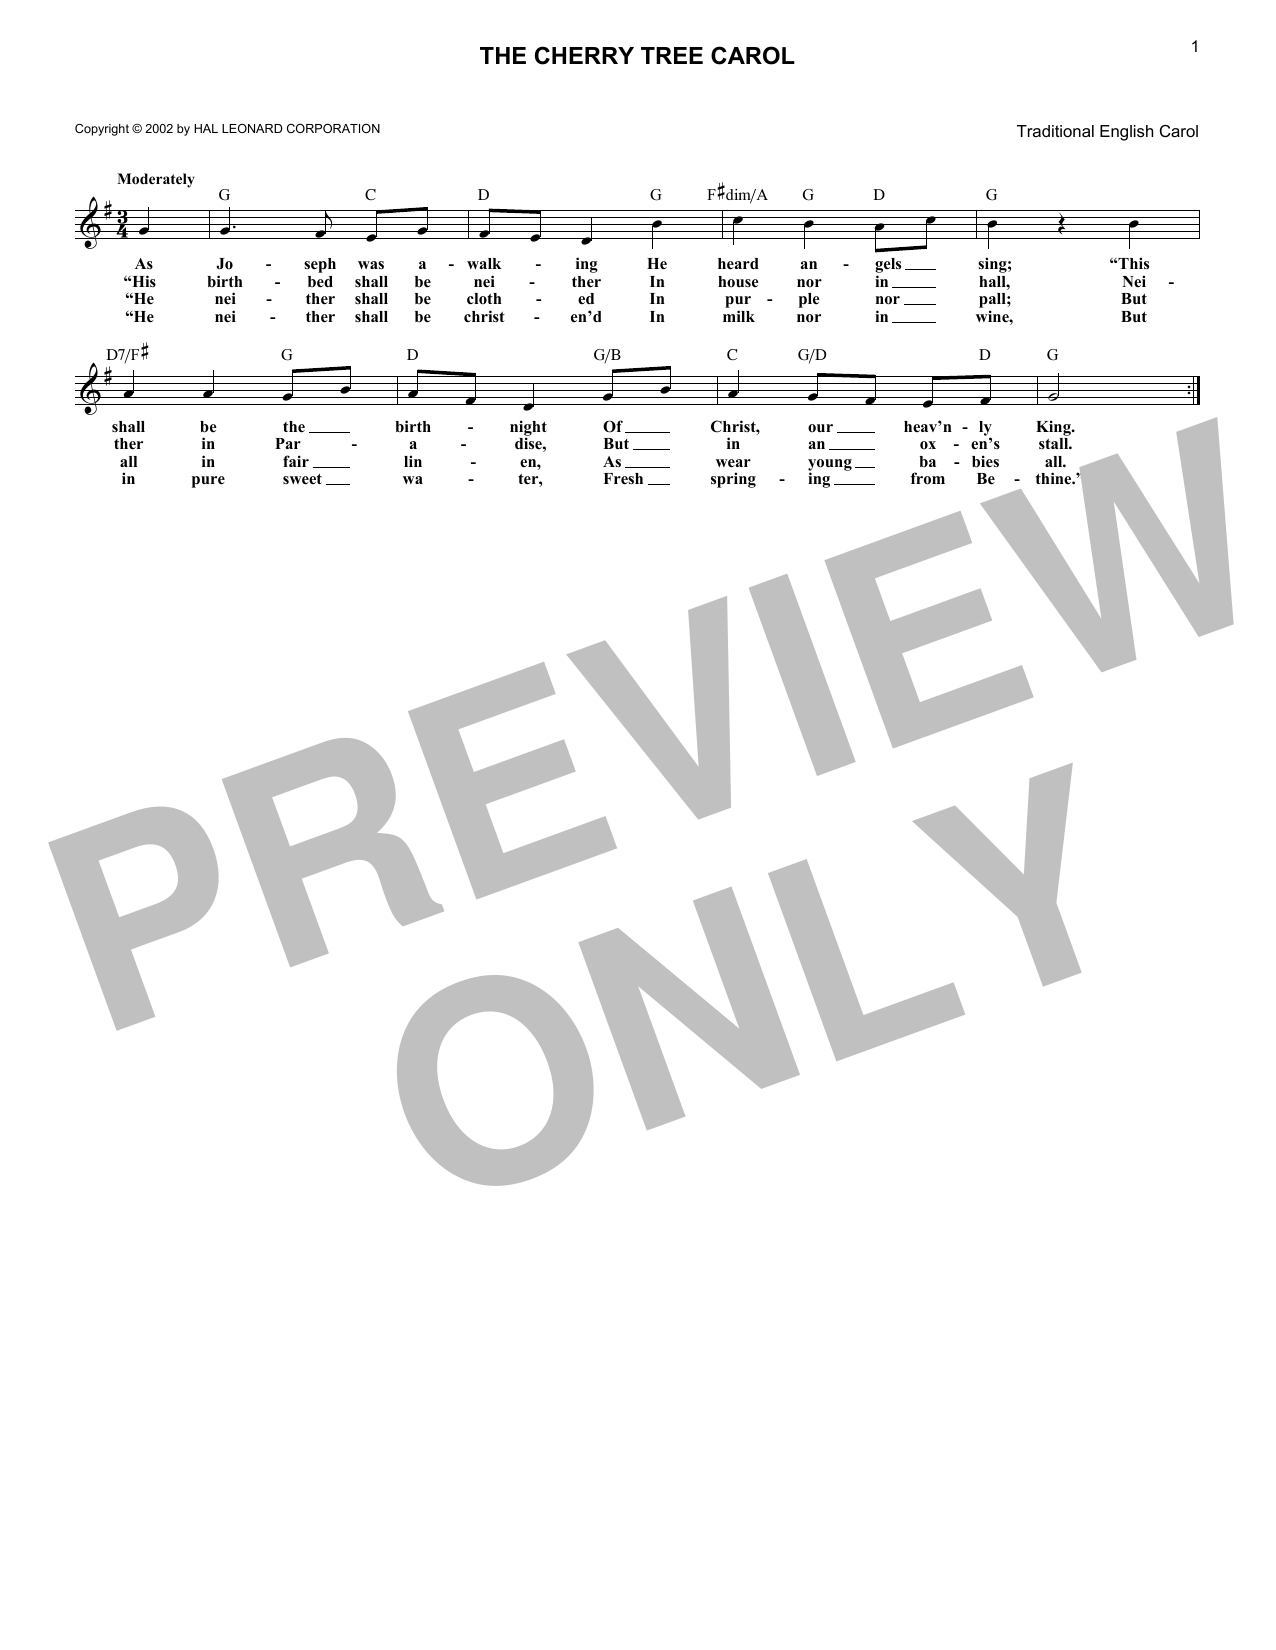 Traditional English Carol The Cherry Tree Carol Sheet Music Notes & Chords for Melody Line, Lyrics & Chords - Download or Print PDF